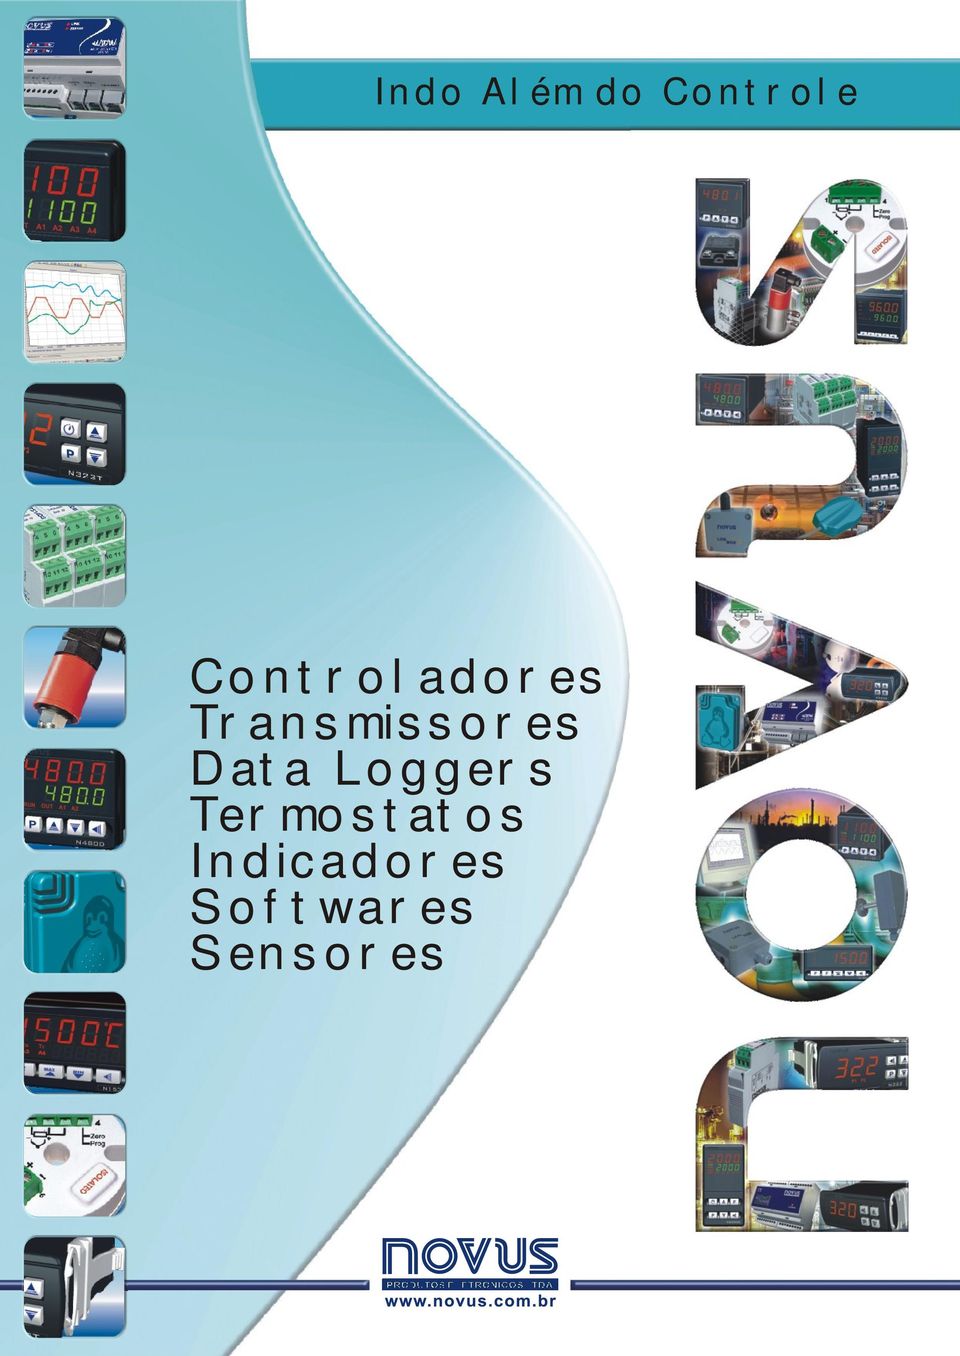 Transmissores Data Loggers